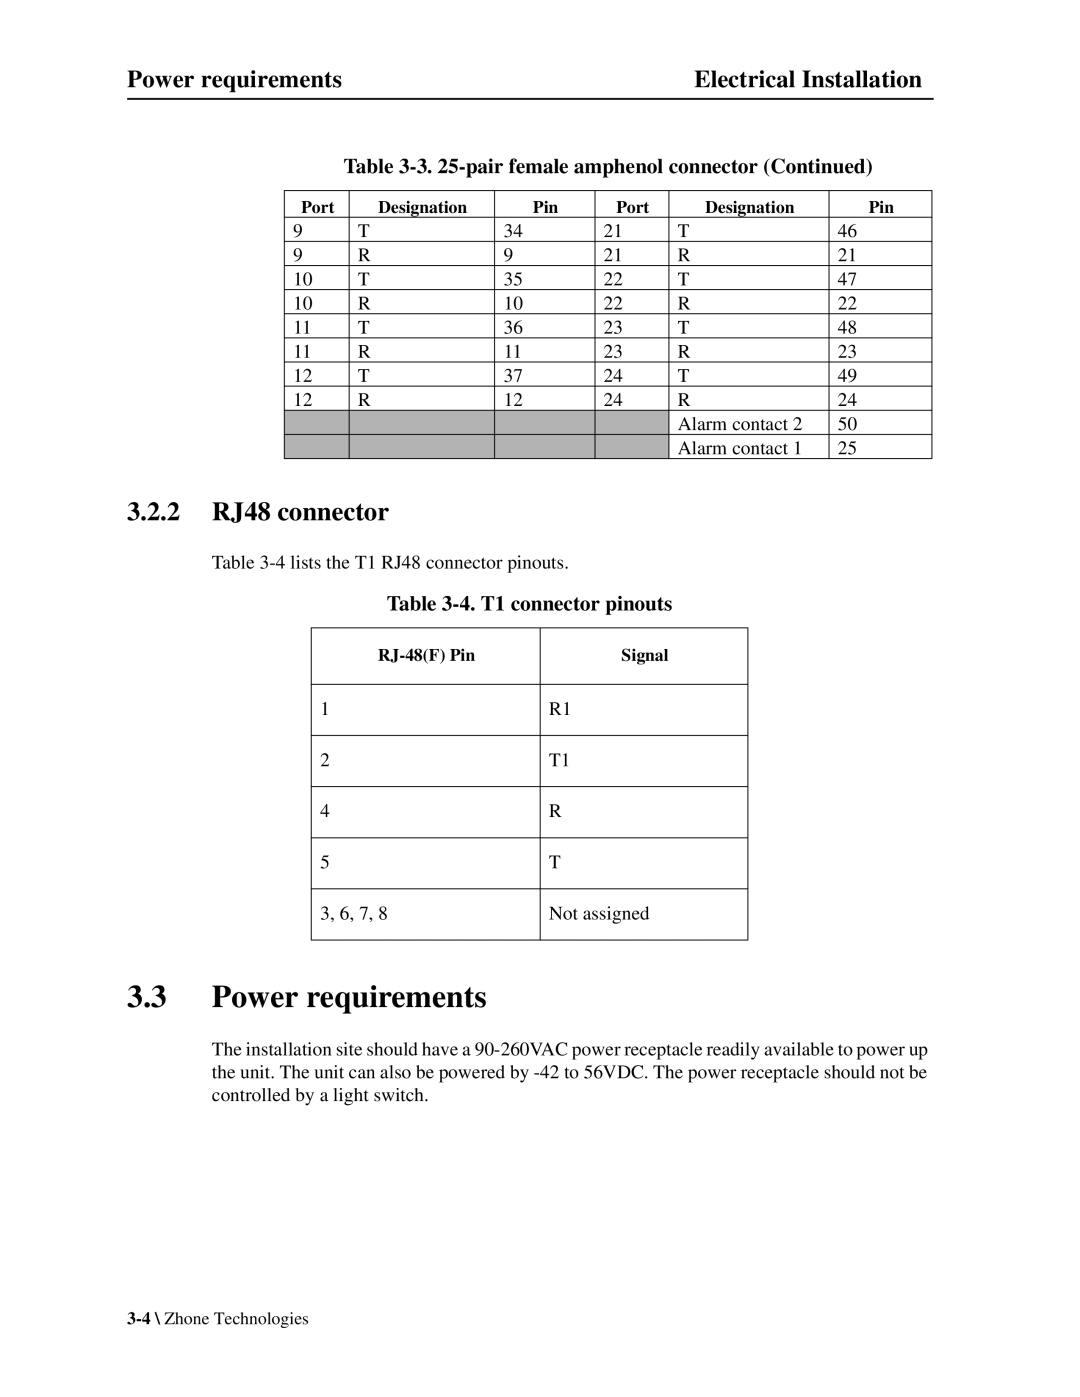 Zhone Technologies Z-PLEX-10-24-DOC-SC manual 2 RJ48 connector, Power requirements Electrical Installation 